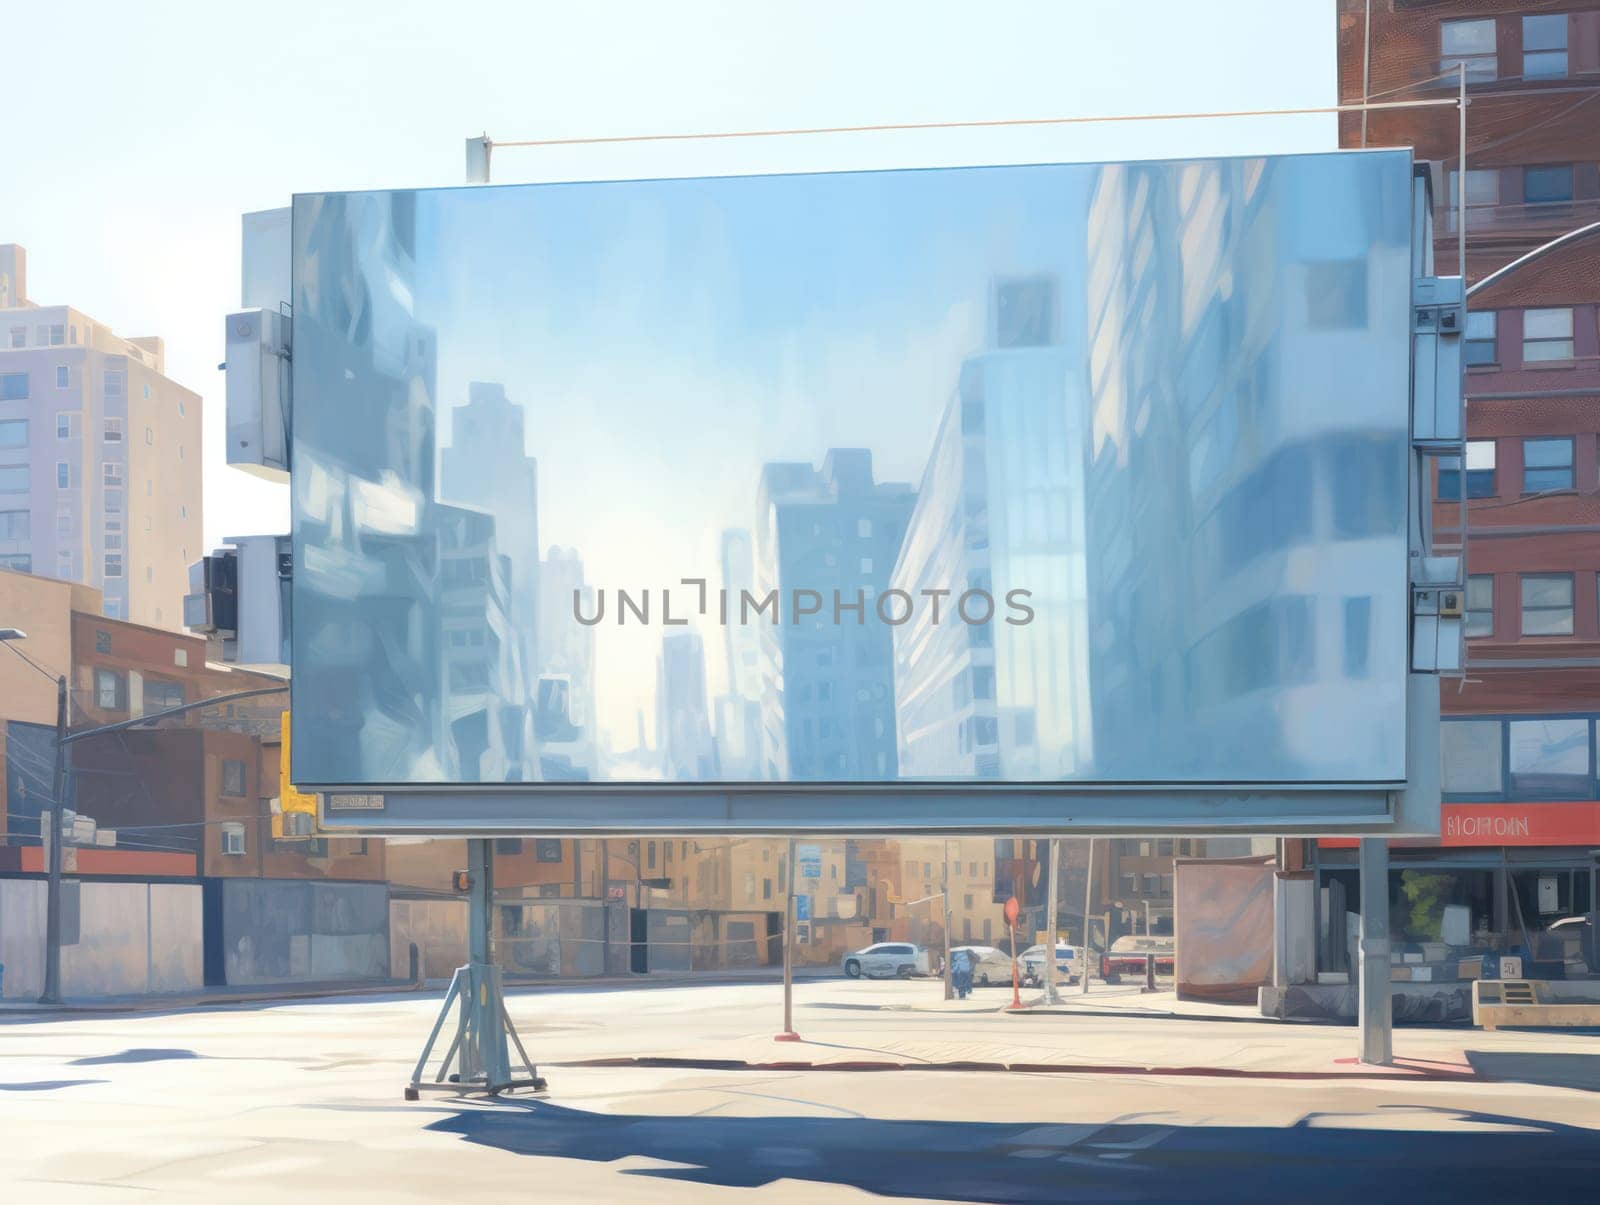 Urban Blank Billboard: A Business Advertisement on Empty City Street by Vichizh